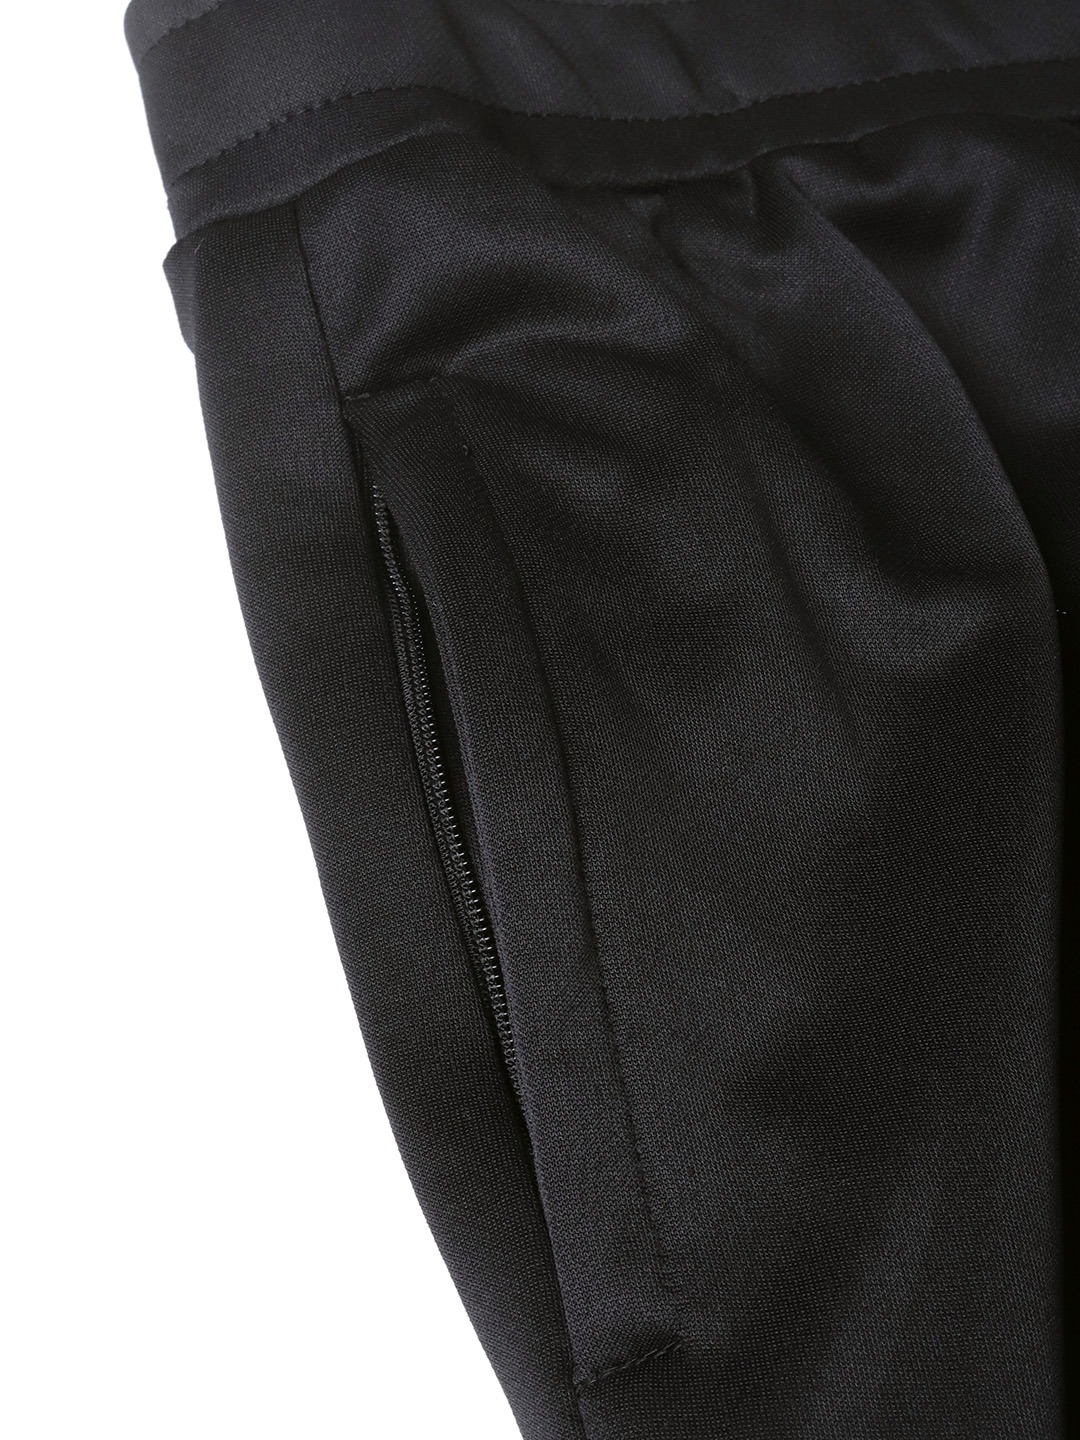 Clothing Tracksuits | Yuuki Men Black Solid Tracksuit - WO93791